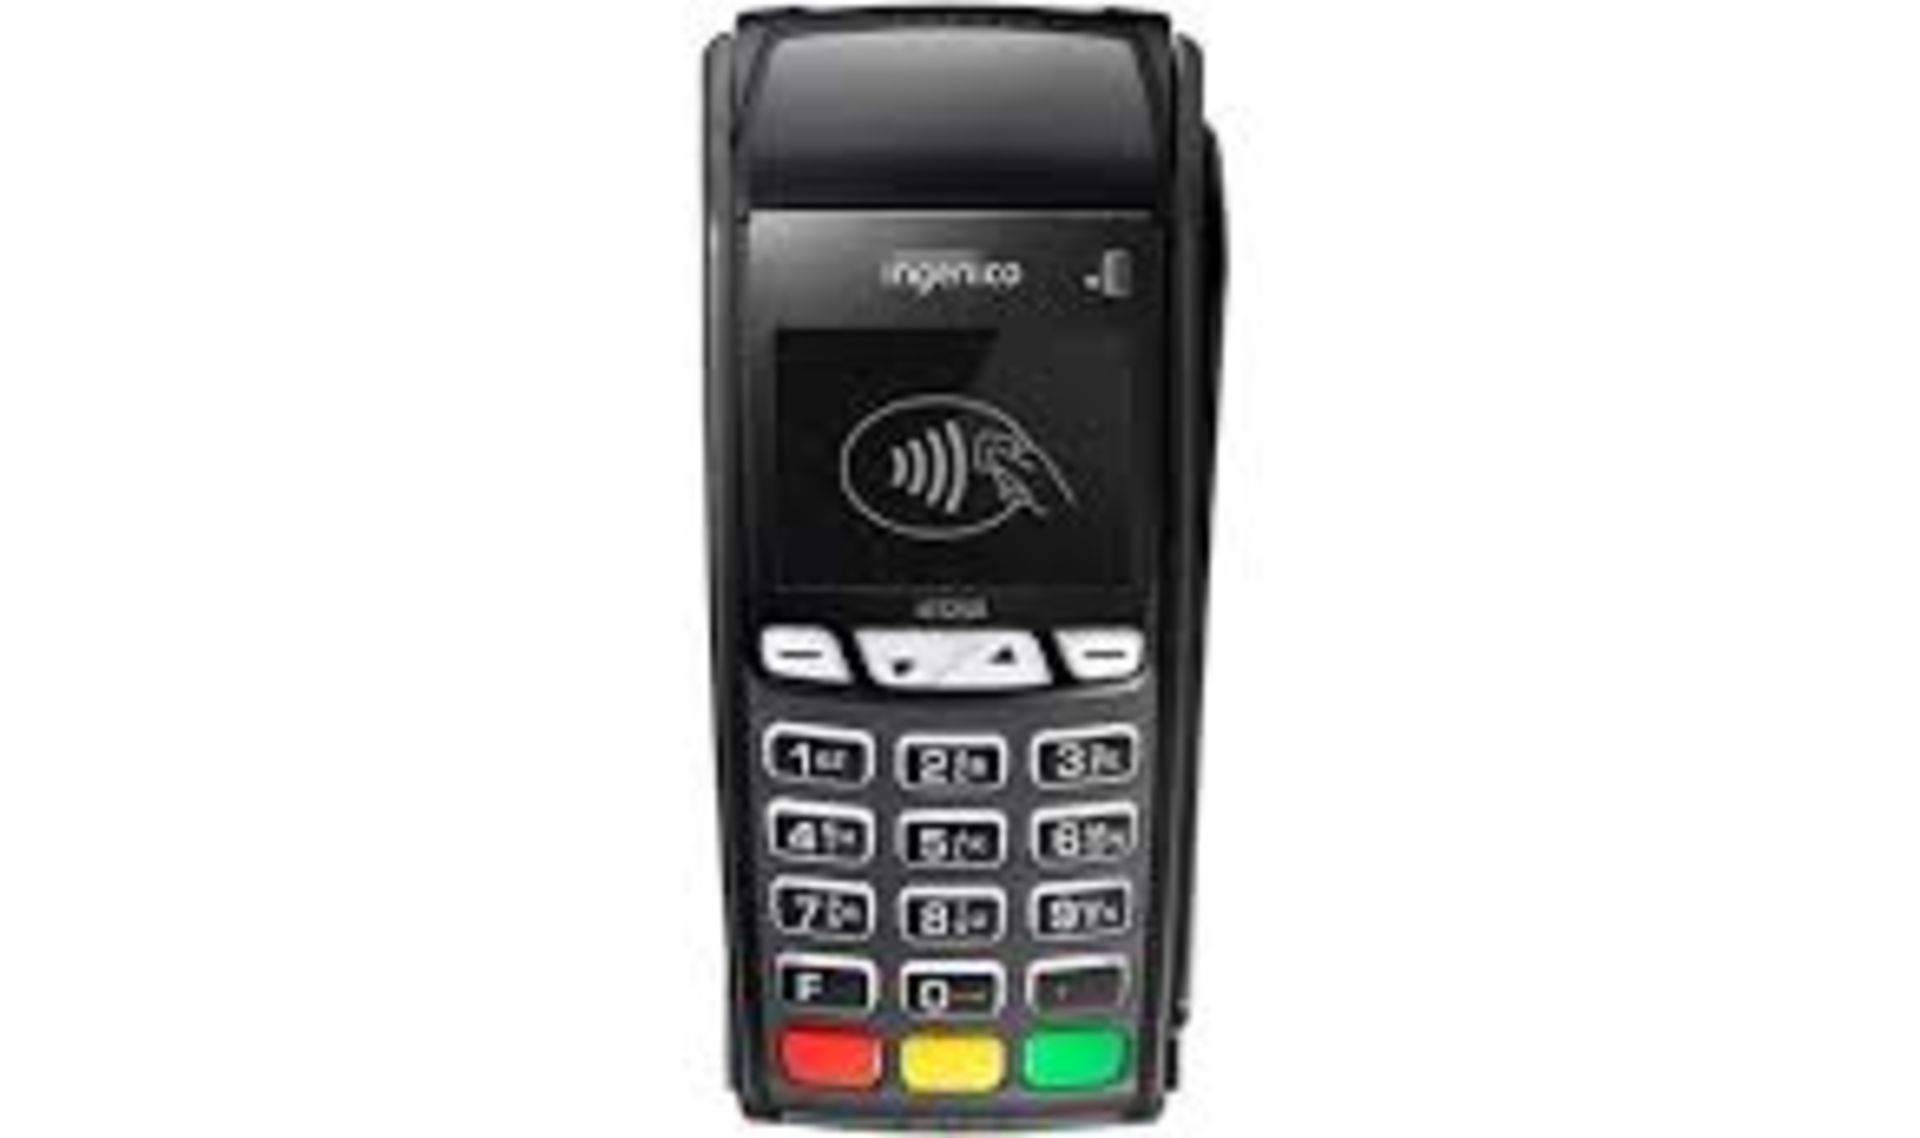 1 x Ingenico ICT250 Credit Card Terminal - Used Condition - location: Altrincham WA14 - Image 2 of 6